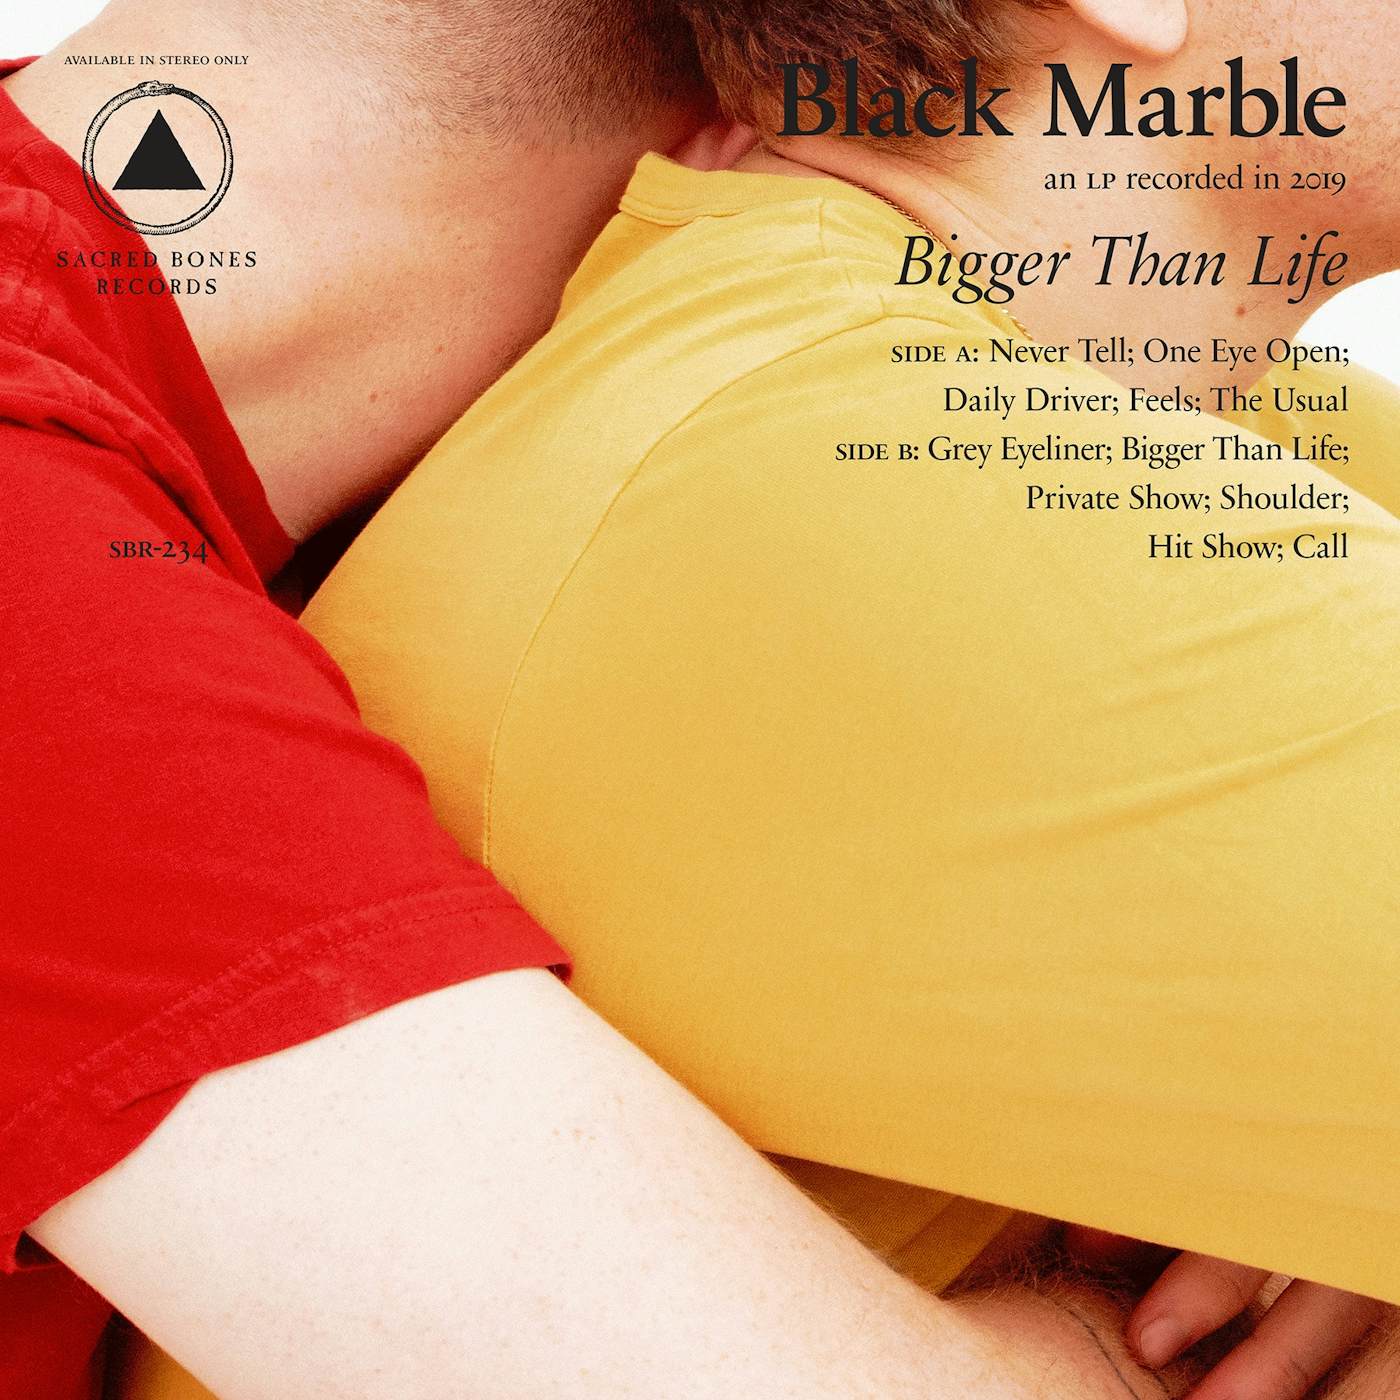 Black Marble Bigger Than Life Vinyl Record